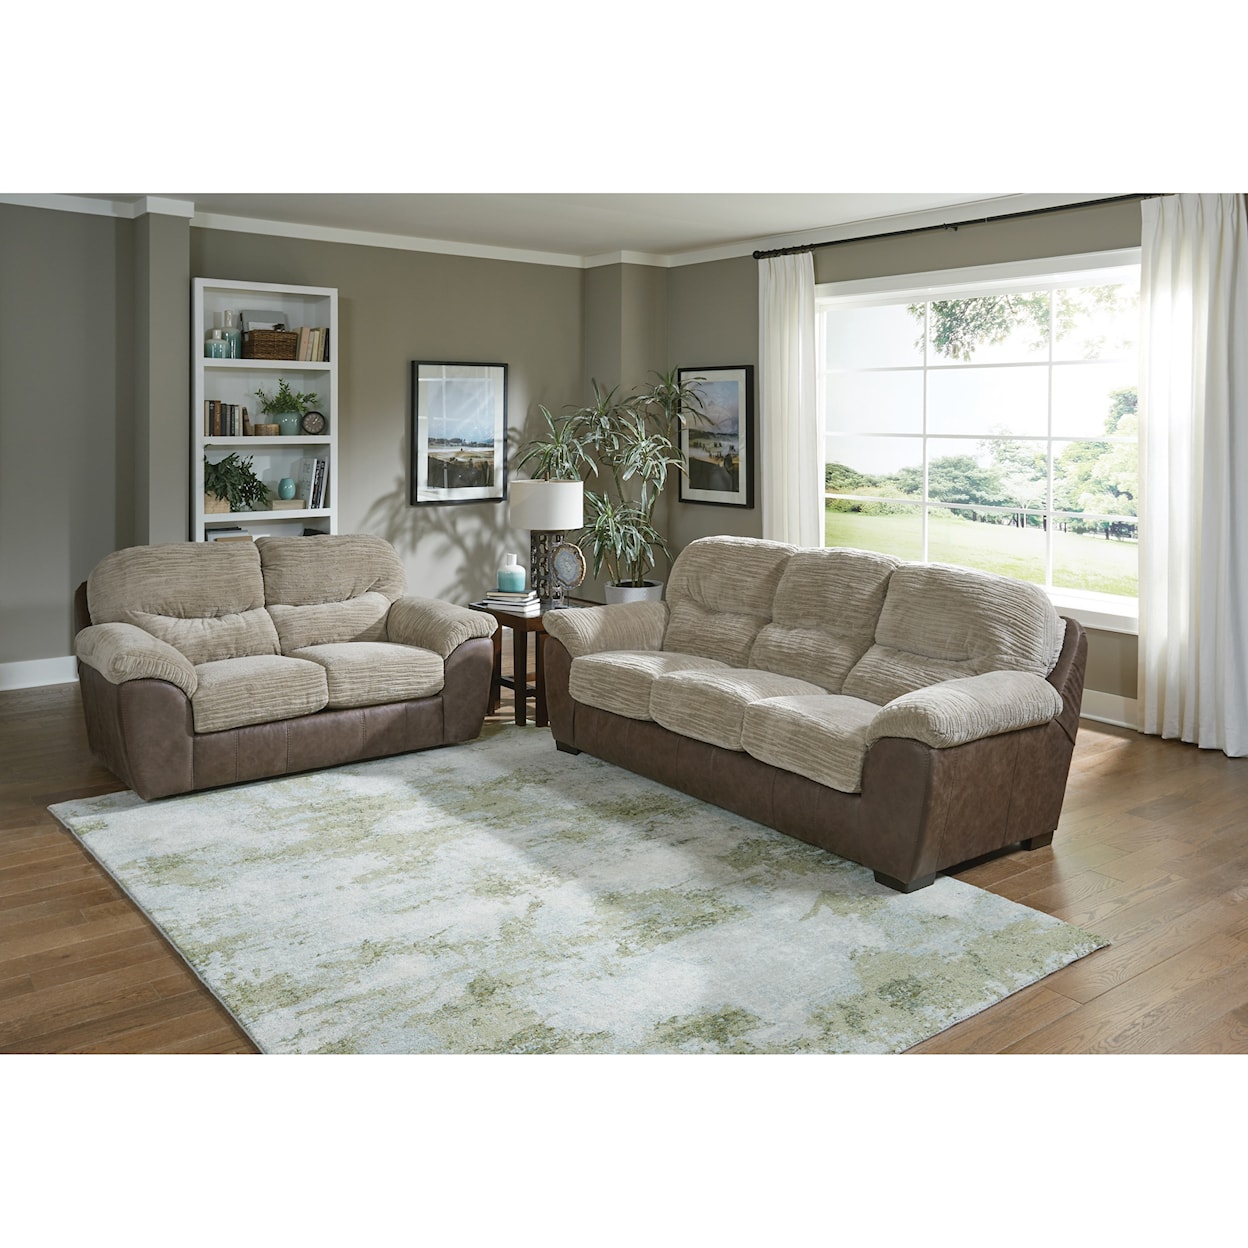 Jackson Furniture 5455 McMahon Living Room Group